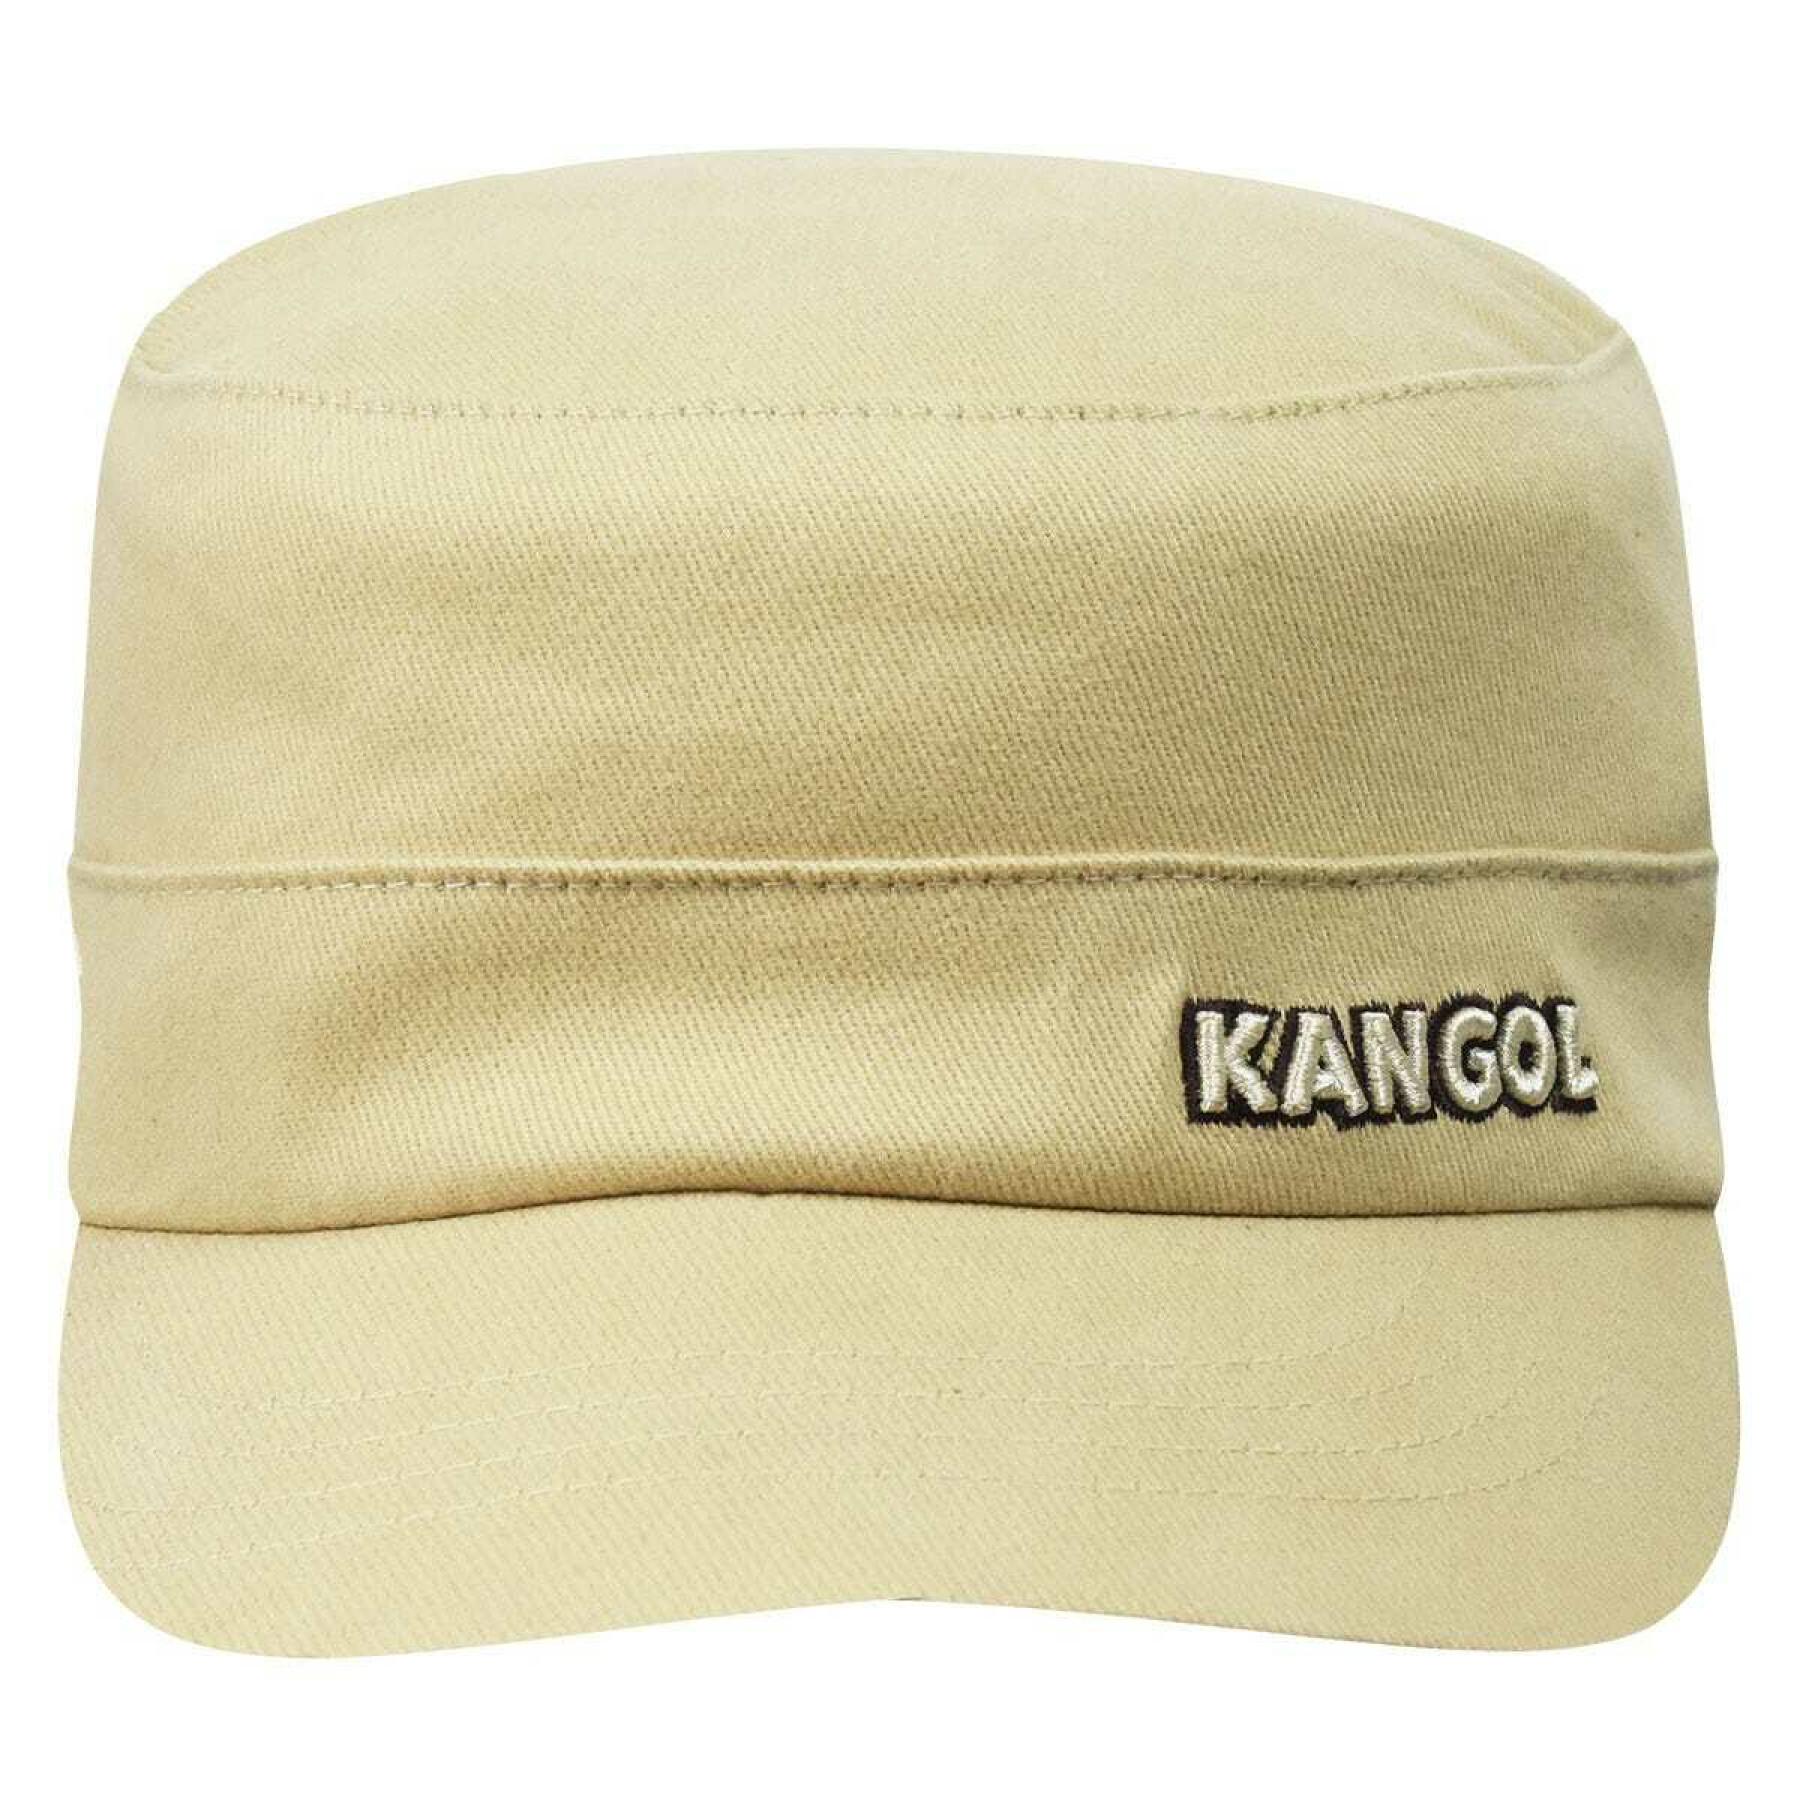 Cap Kangol coton Twill Army